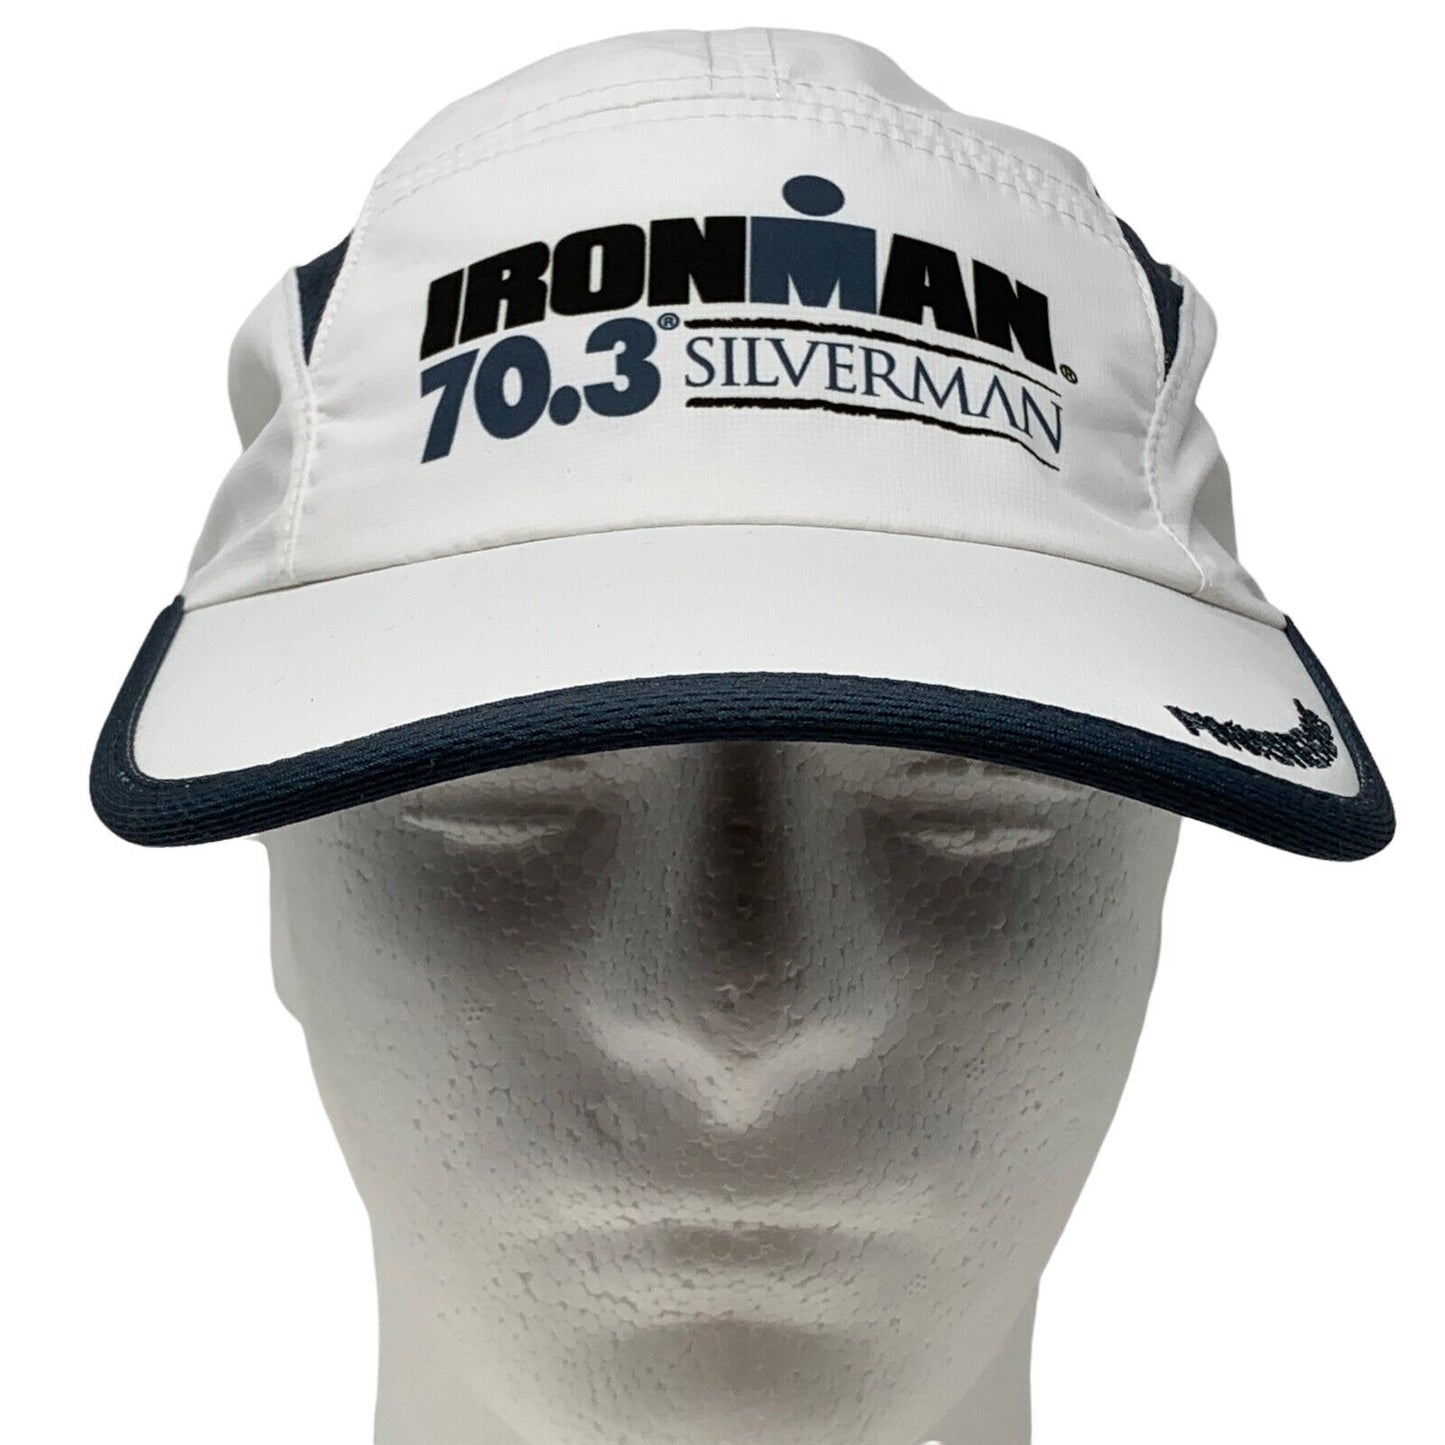 Ironman Silverman Finisher 2015 Strapback Hat Las Vegas Runner 5 Five Panel Cap